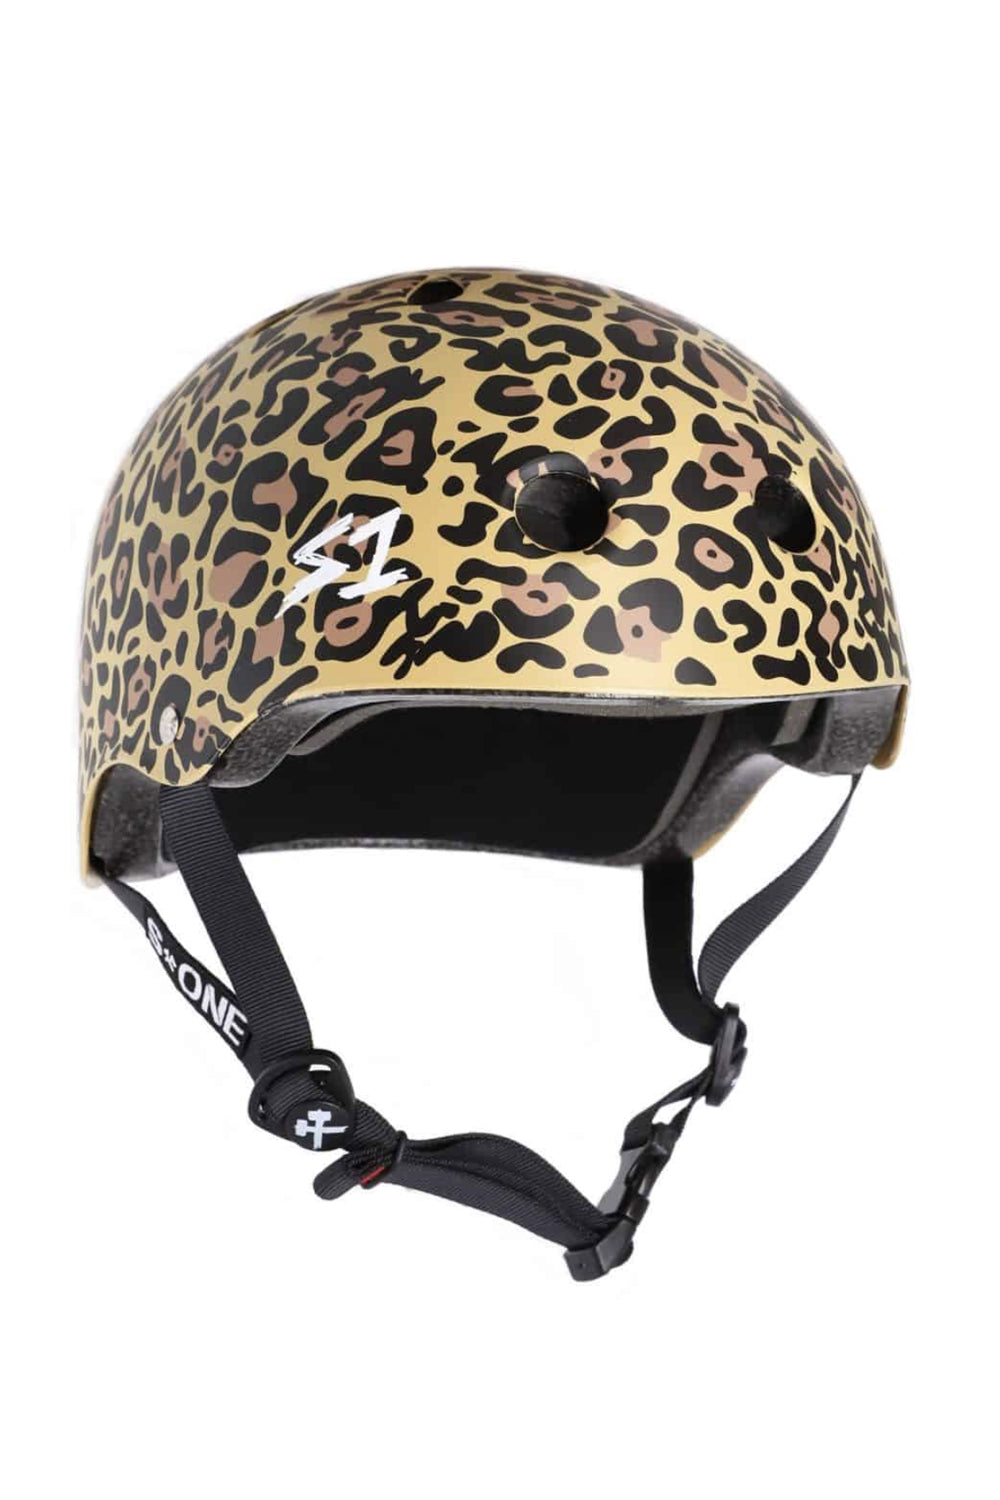 S One Lifer Helmet - Leopard